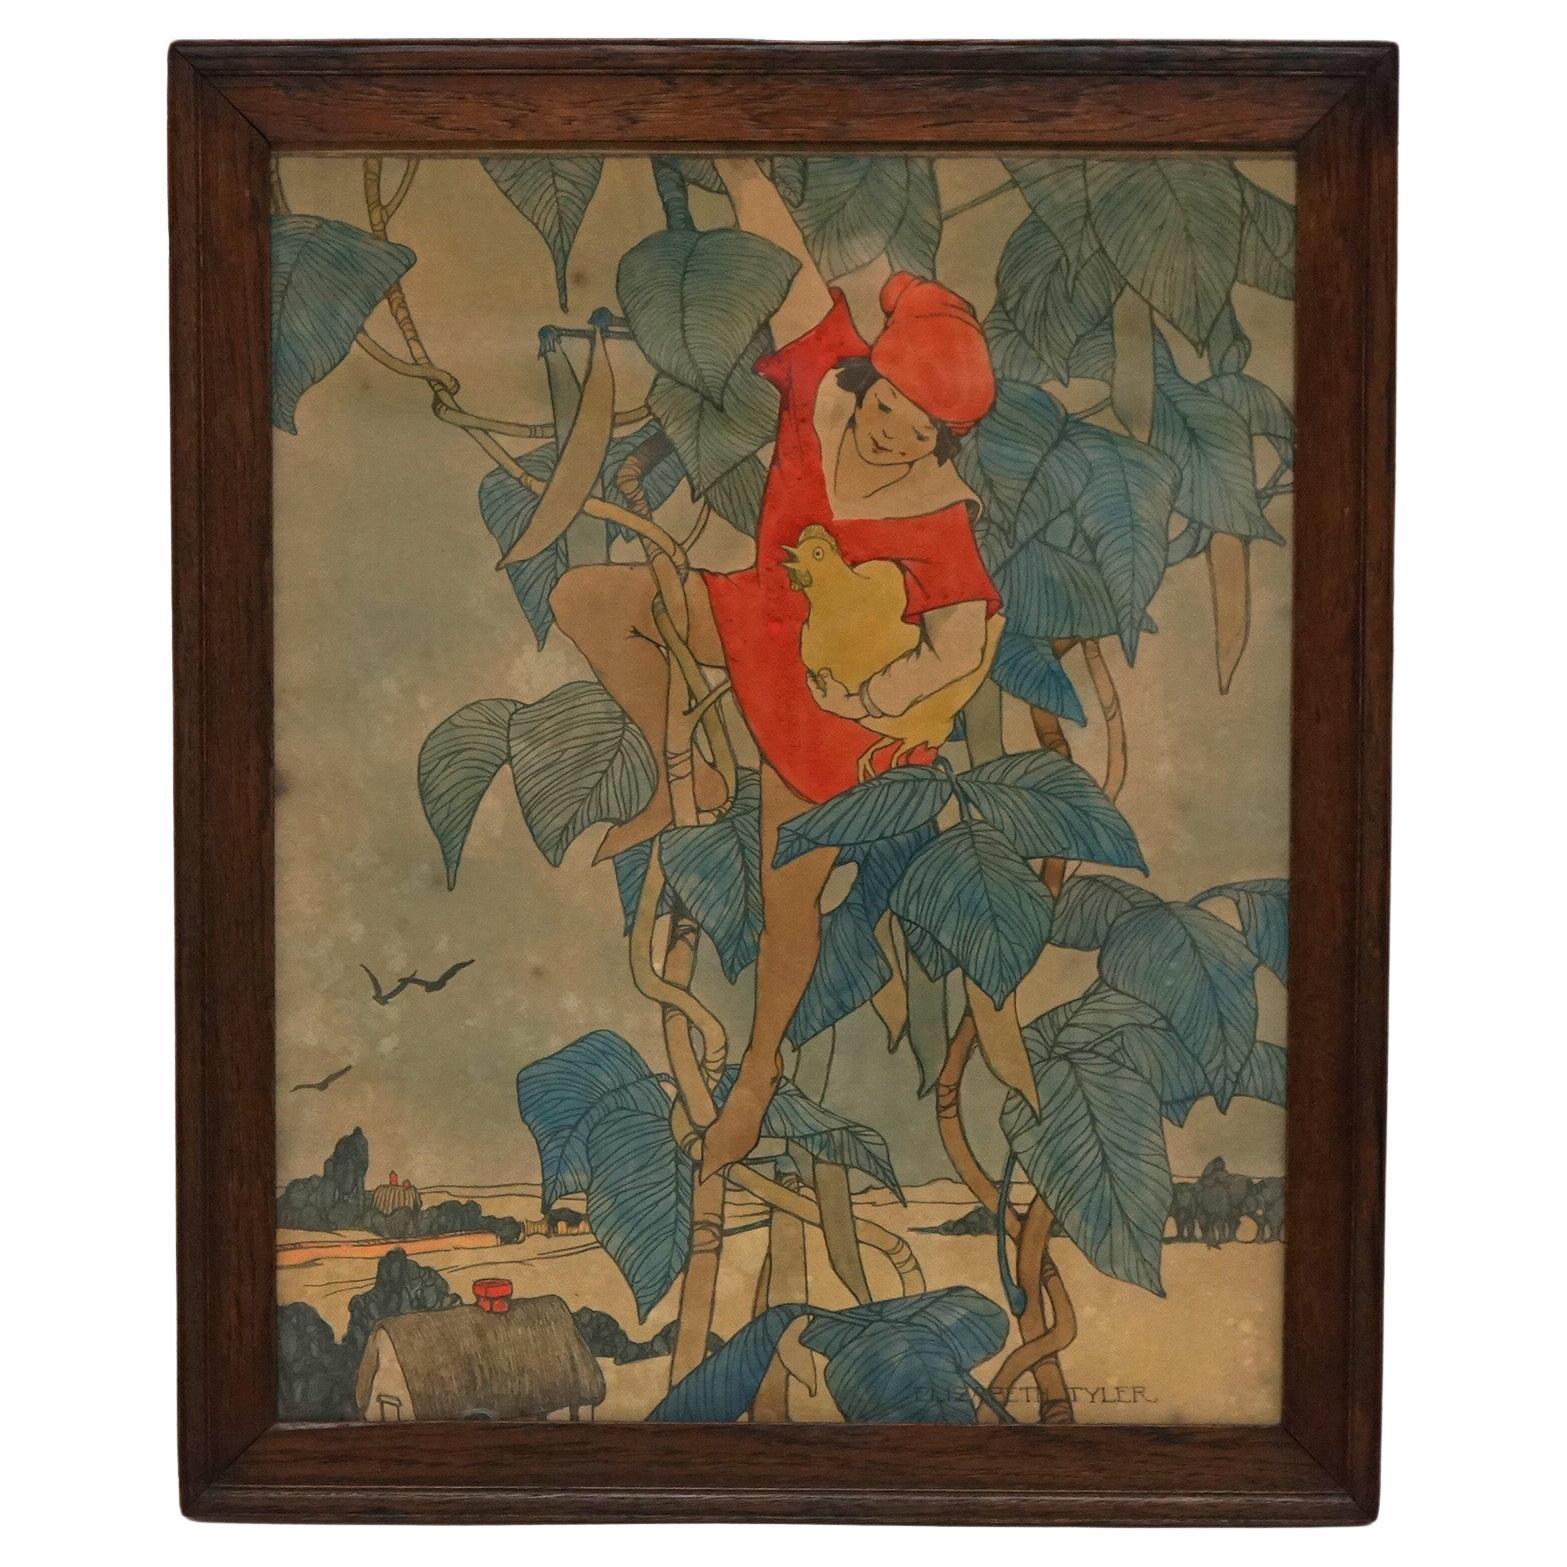 Antique Elizabeth Tyler Lithograph “Jack And The Beanstalk”, Framed, C1920 For Sale